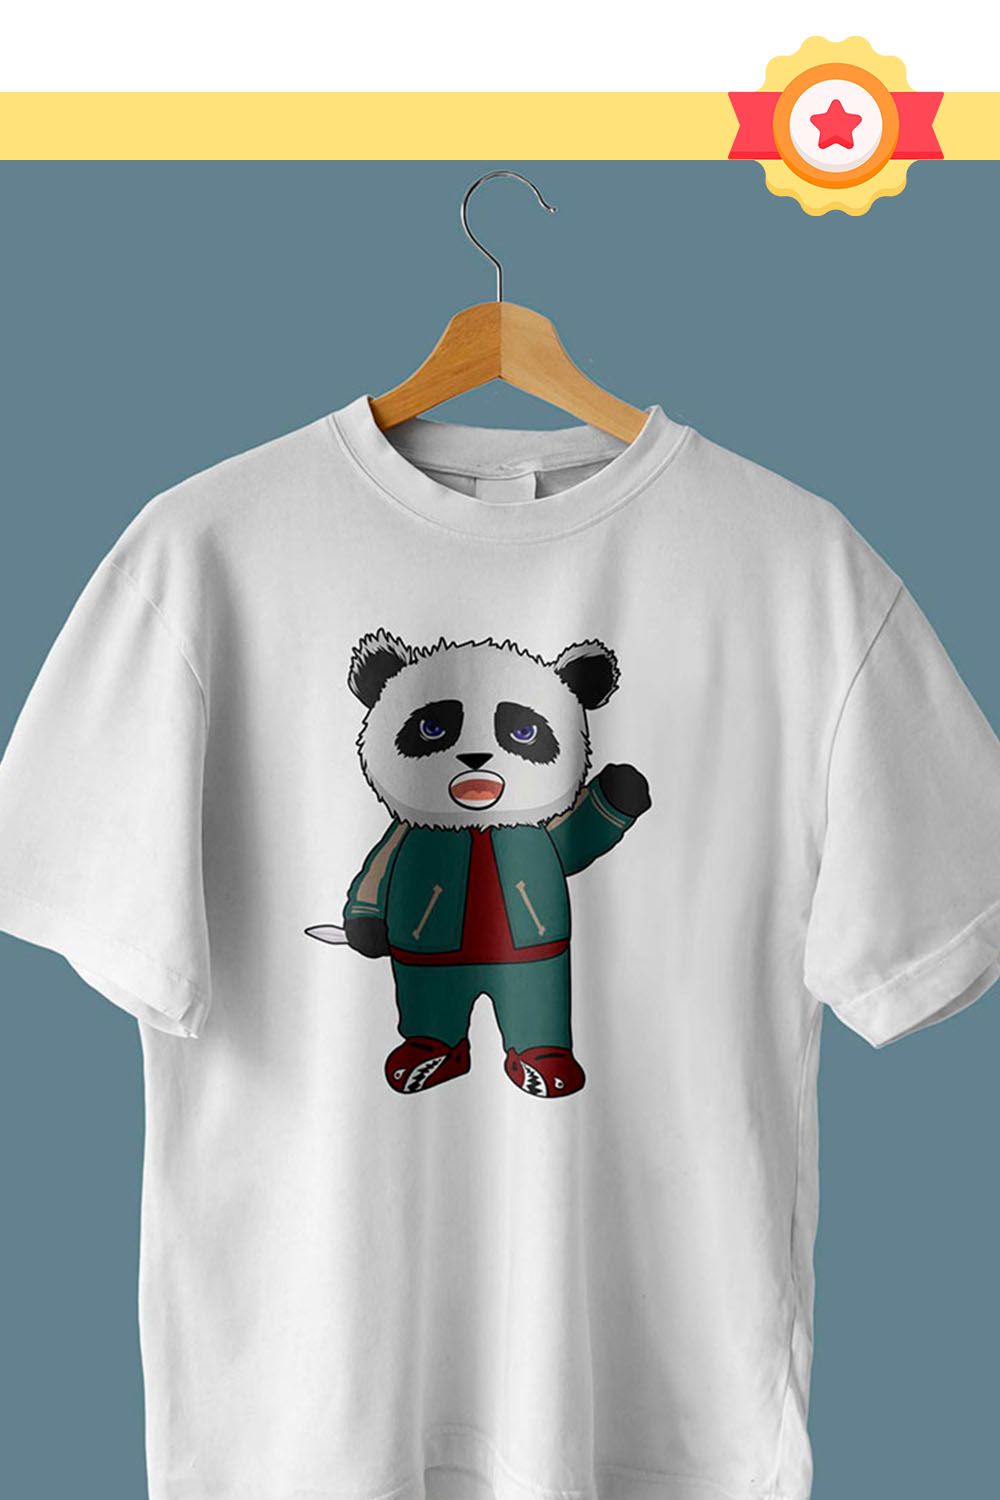 Cute Panda Illustration T-shirt Pinterest image.